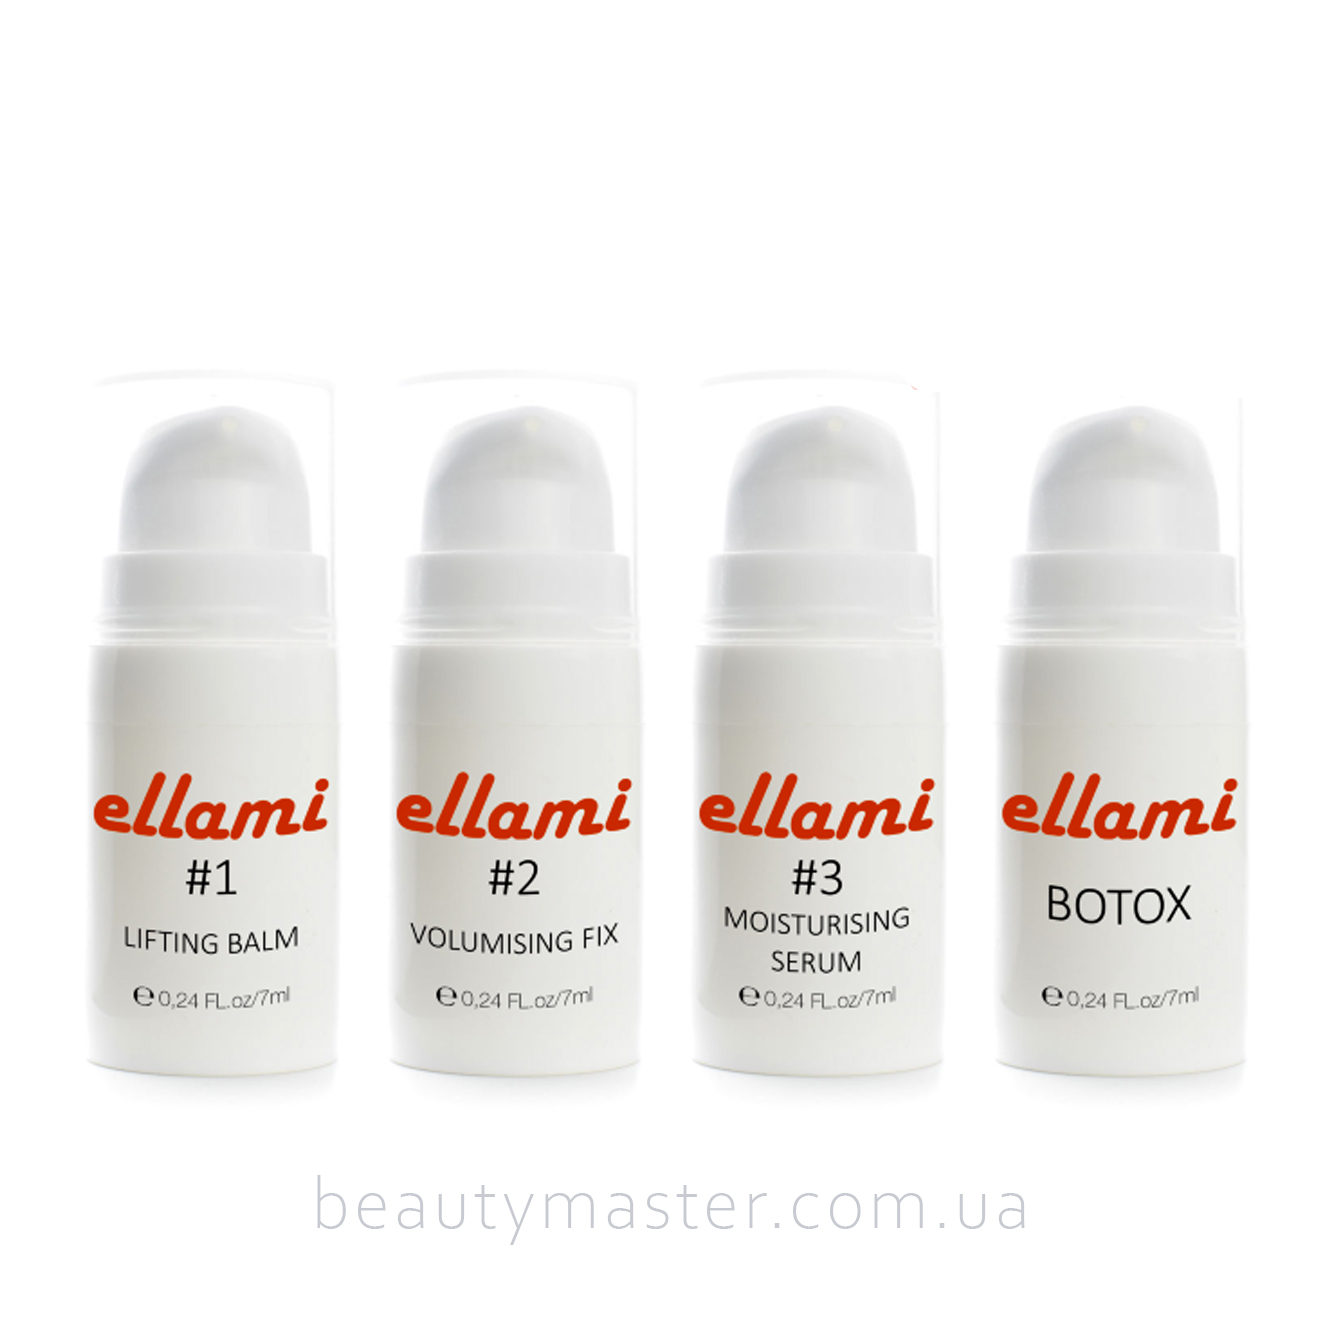 ellami Набор из 4-х- №1 lifting balm, №2 volumising fix, №3 moisturising serum, botox